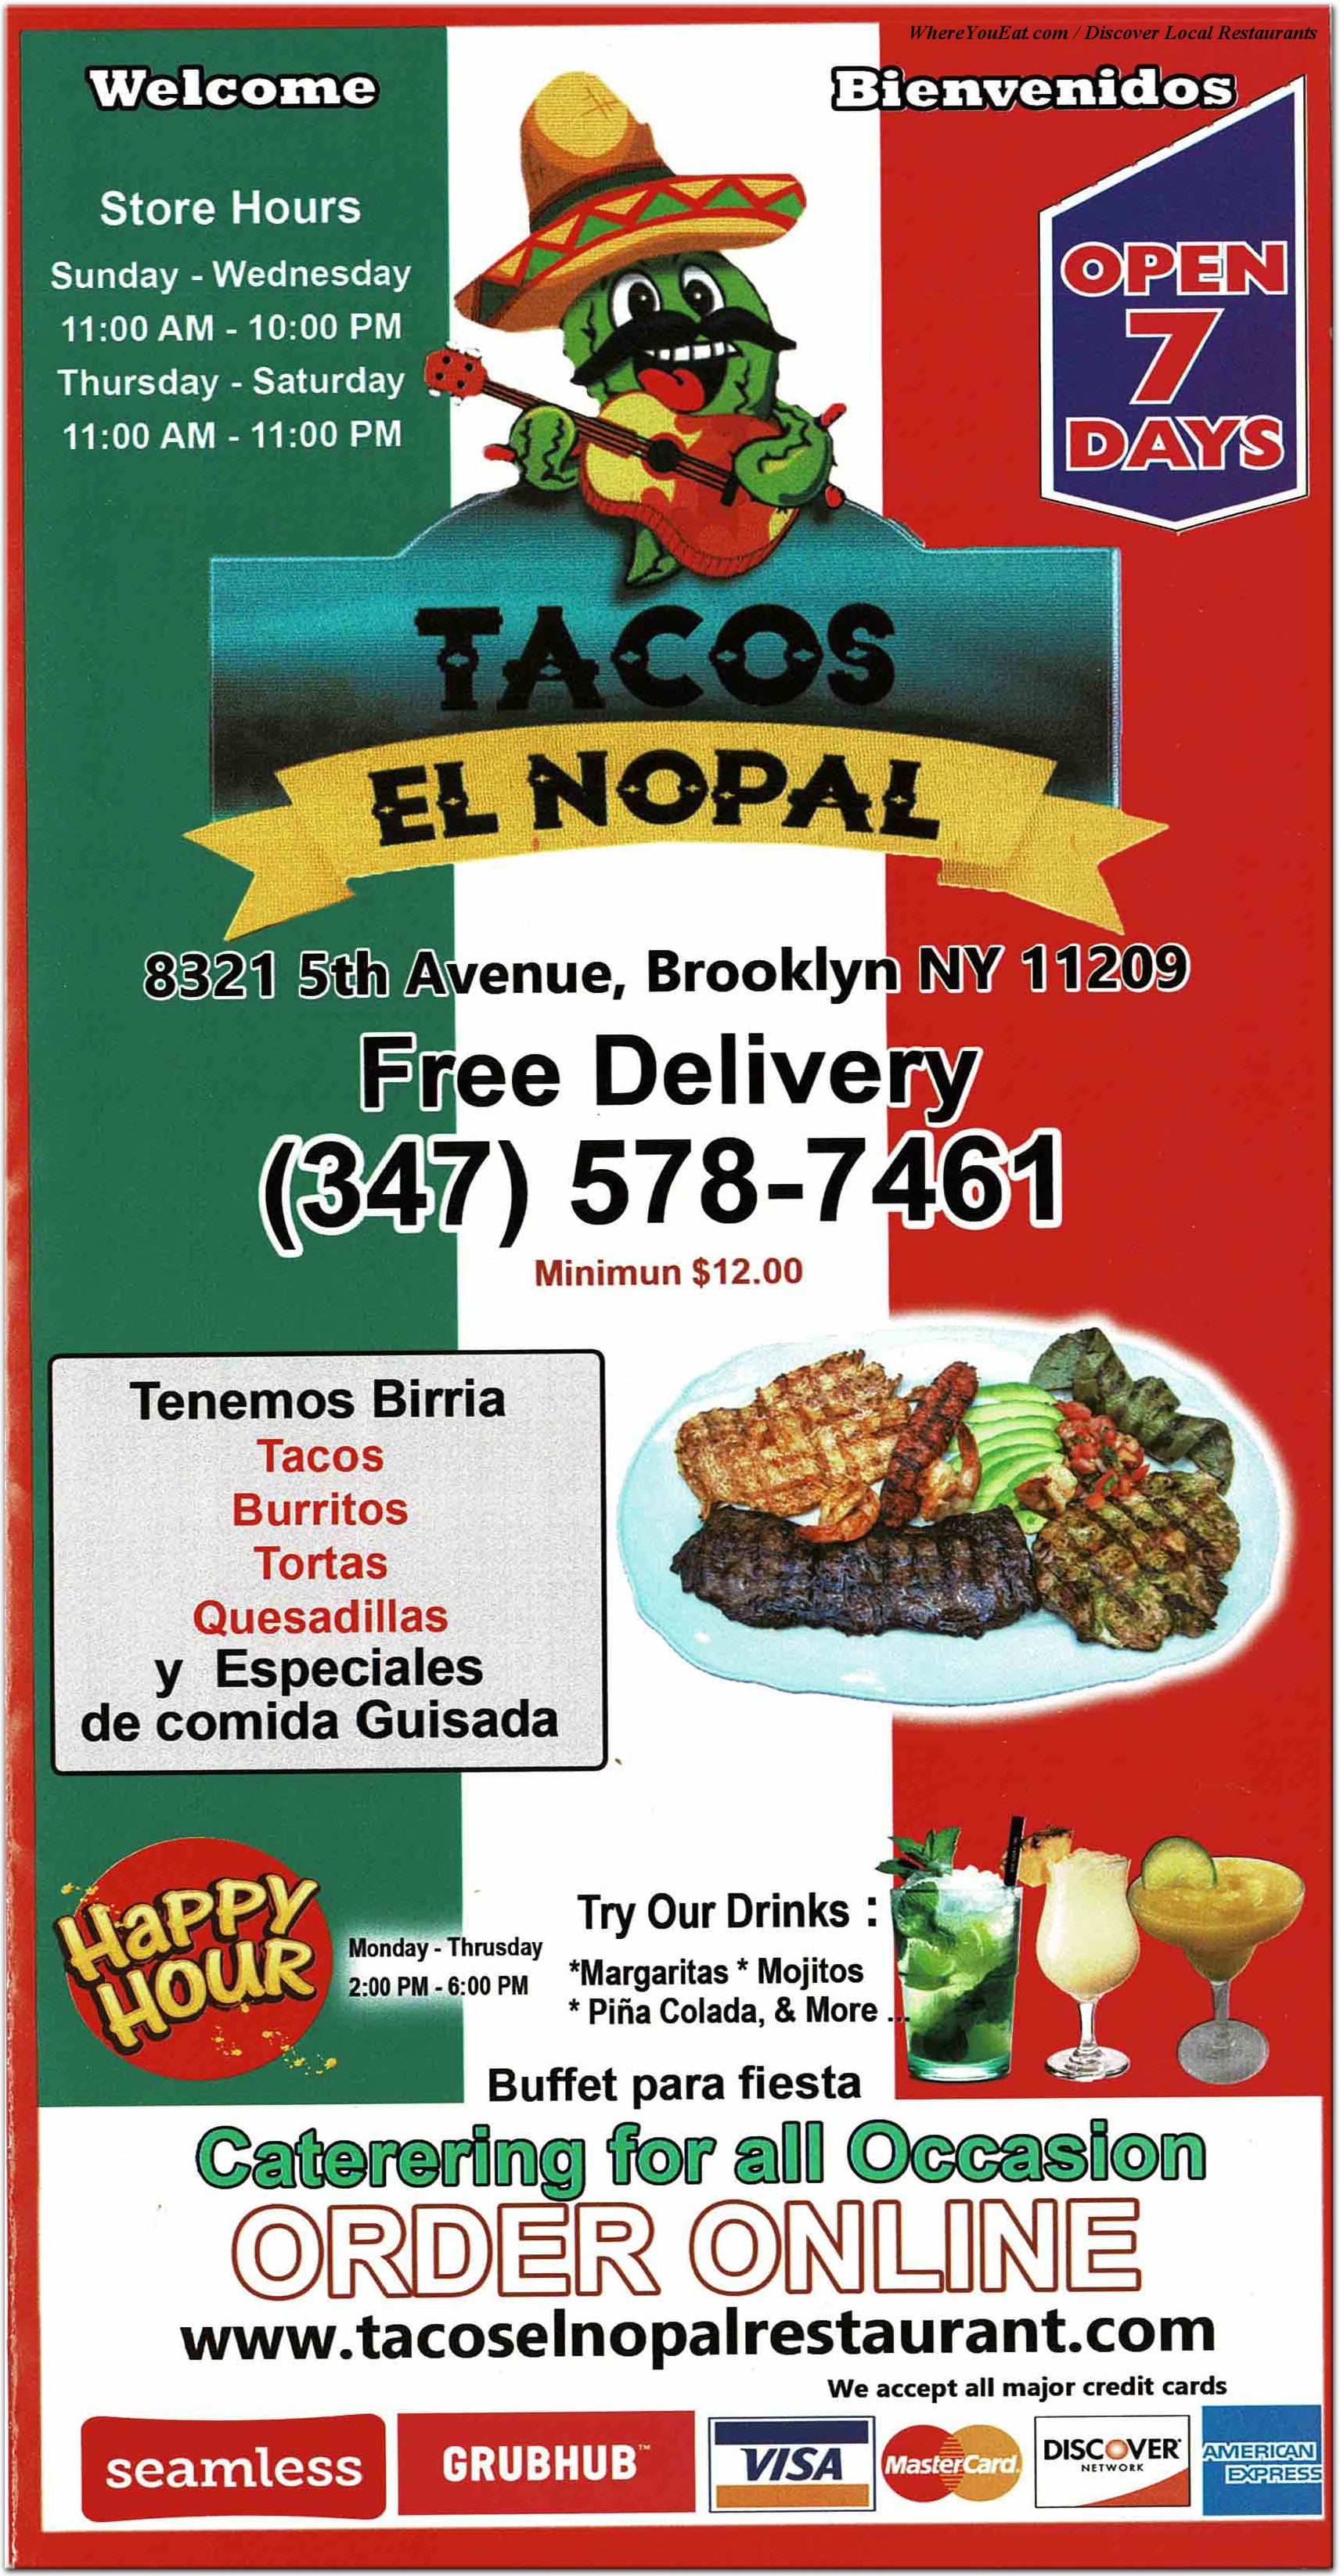 Tacos El Nopal Restaurant in Brooklyn / Menus & Photos